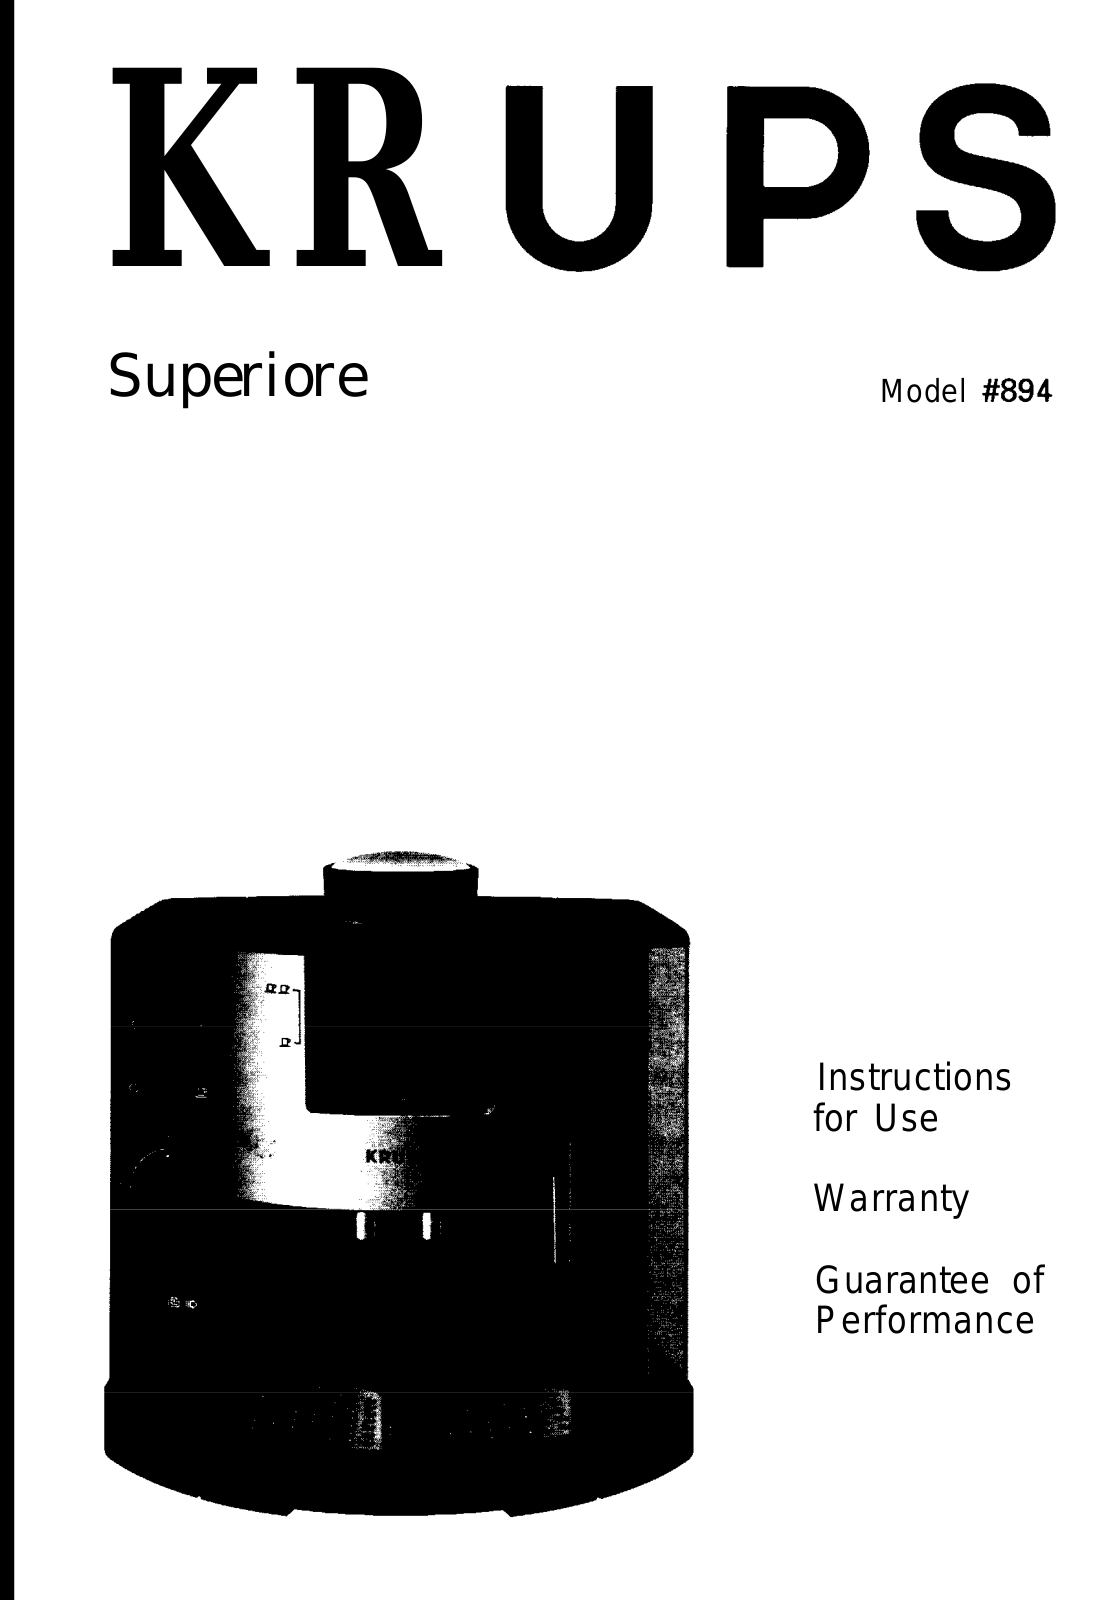 Krups SUPERIORE, 894 User Manual